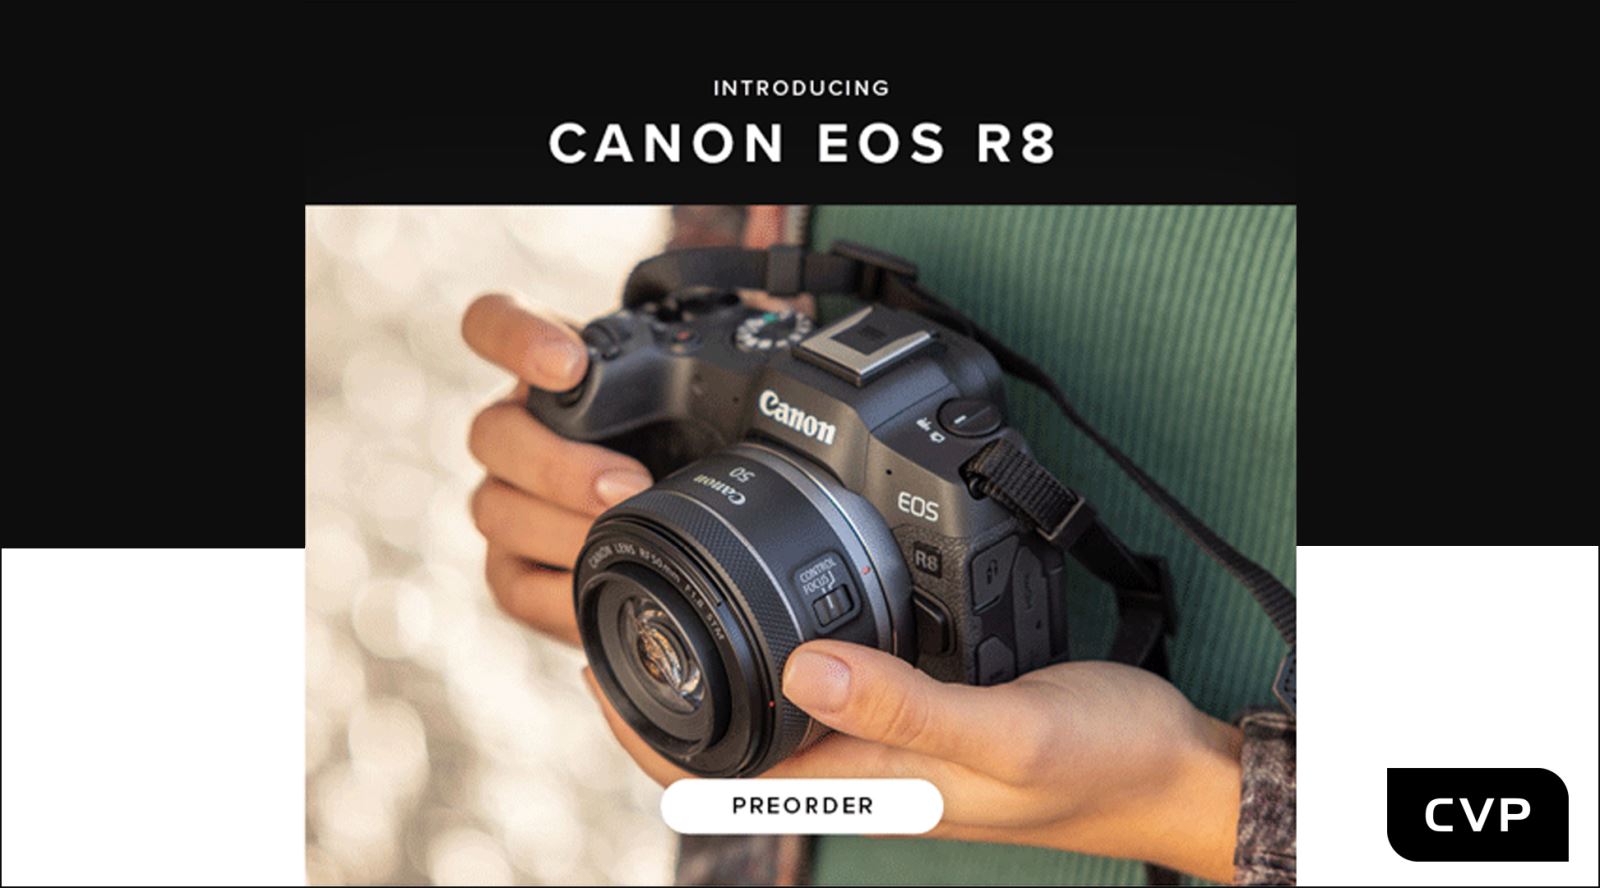 CVP Introduces the Canon EOS R8